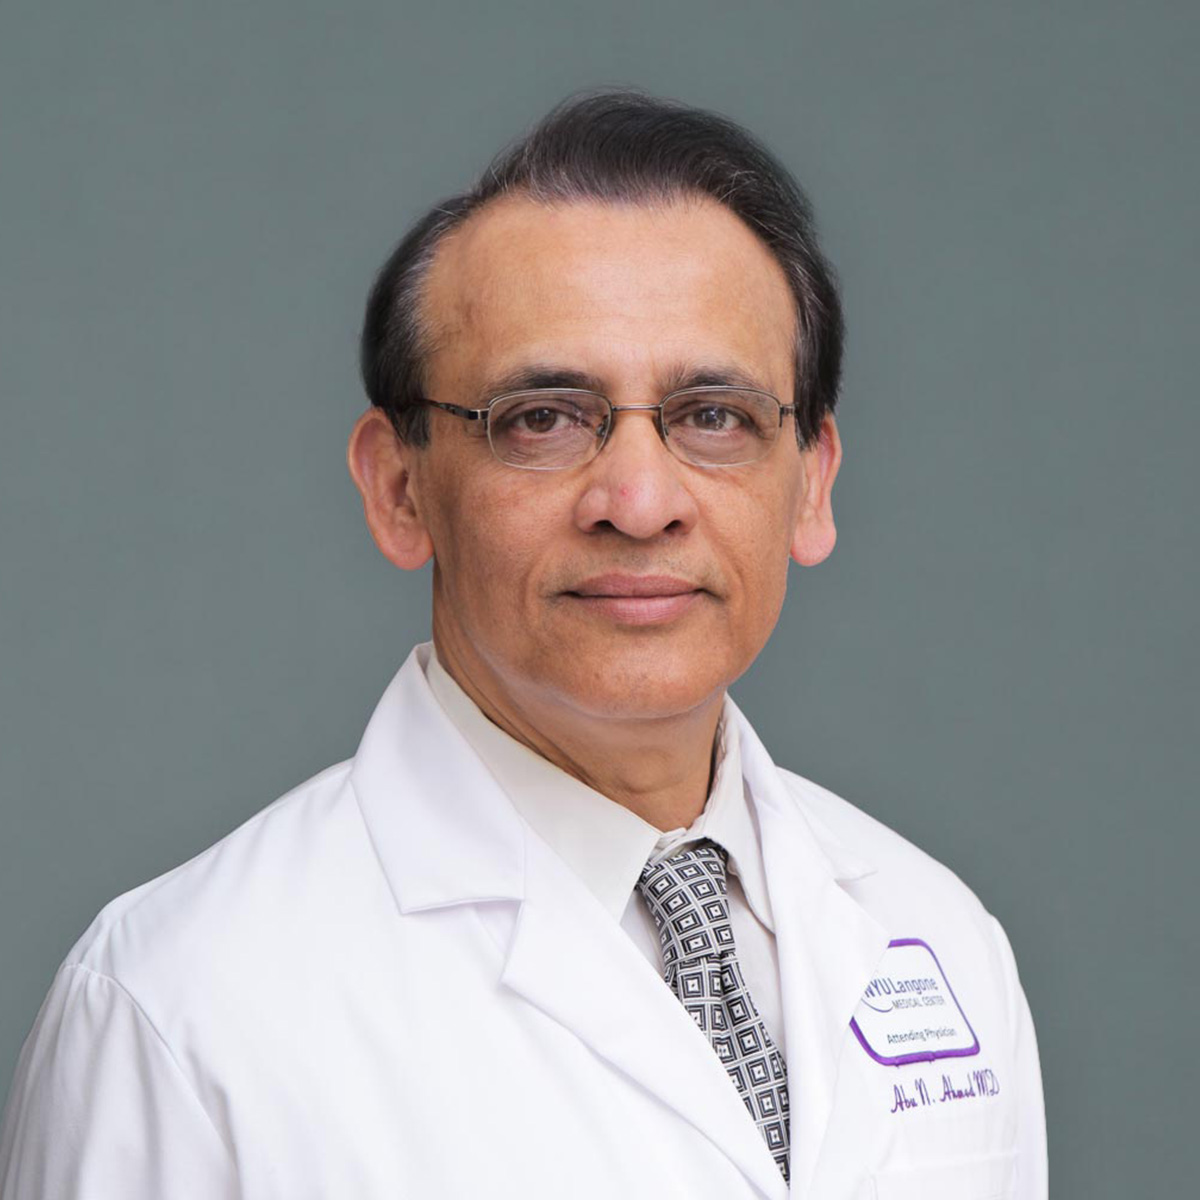 Abu Ahmed,MD. Hematology, Medical Oncology